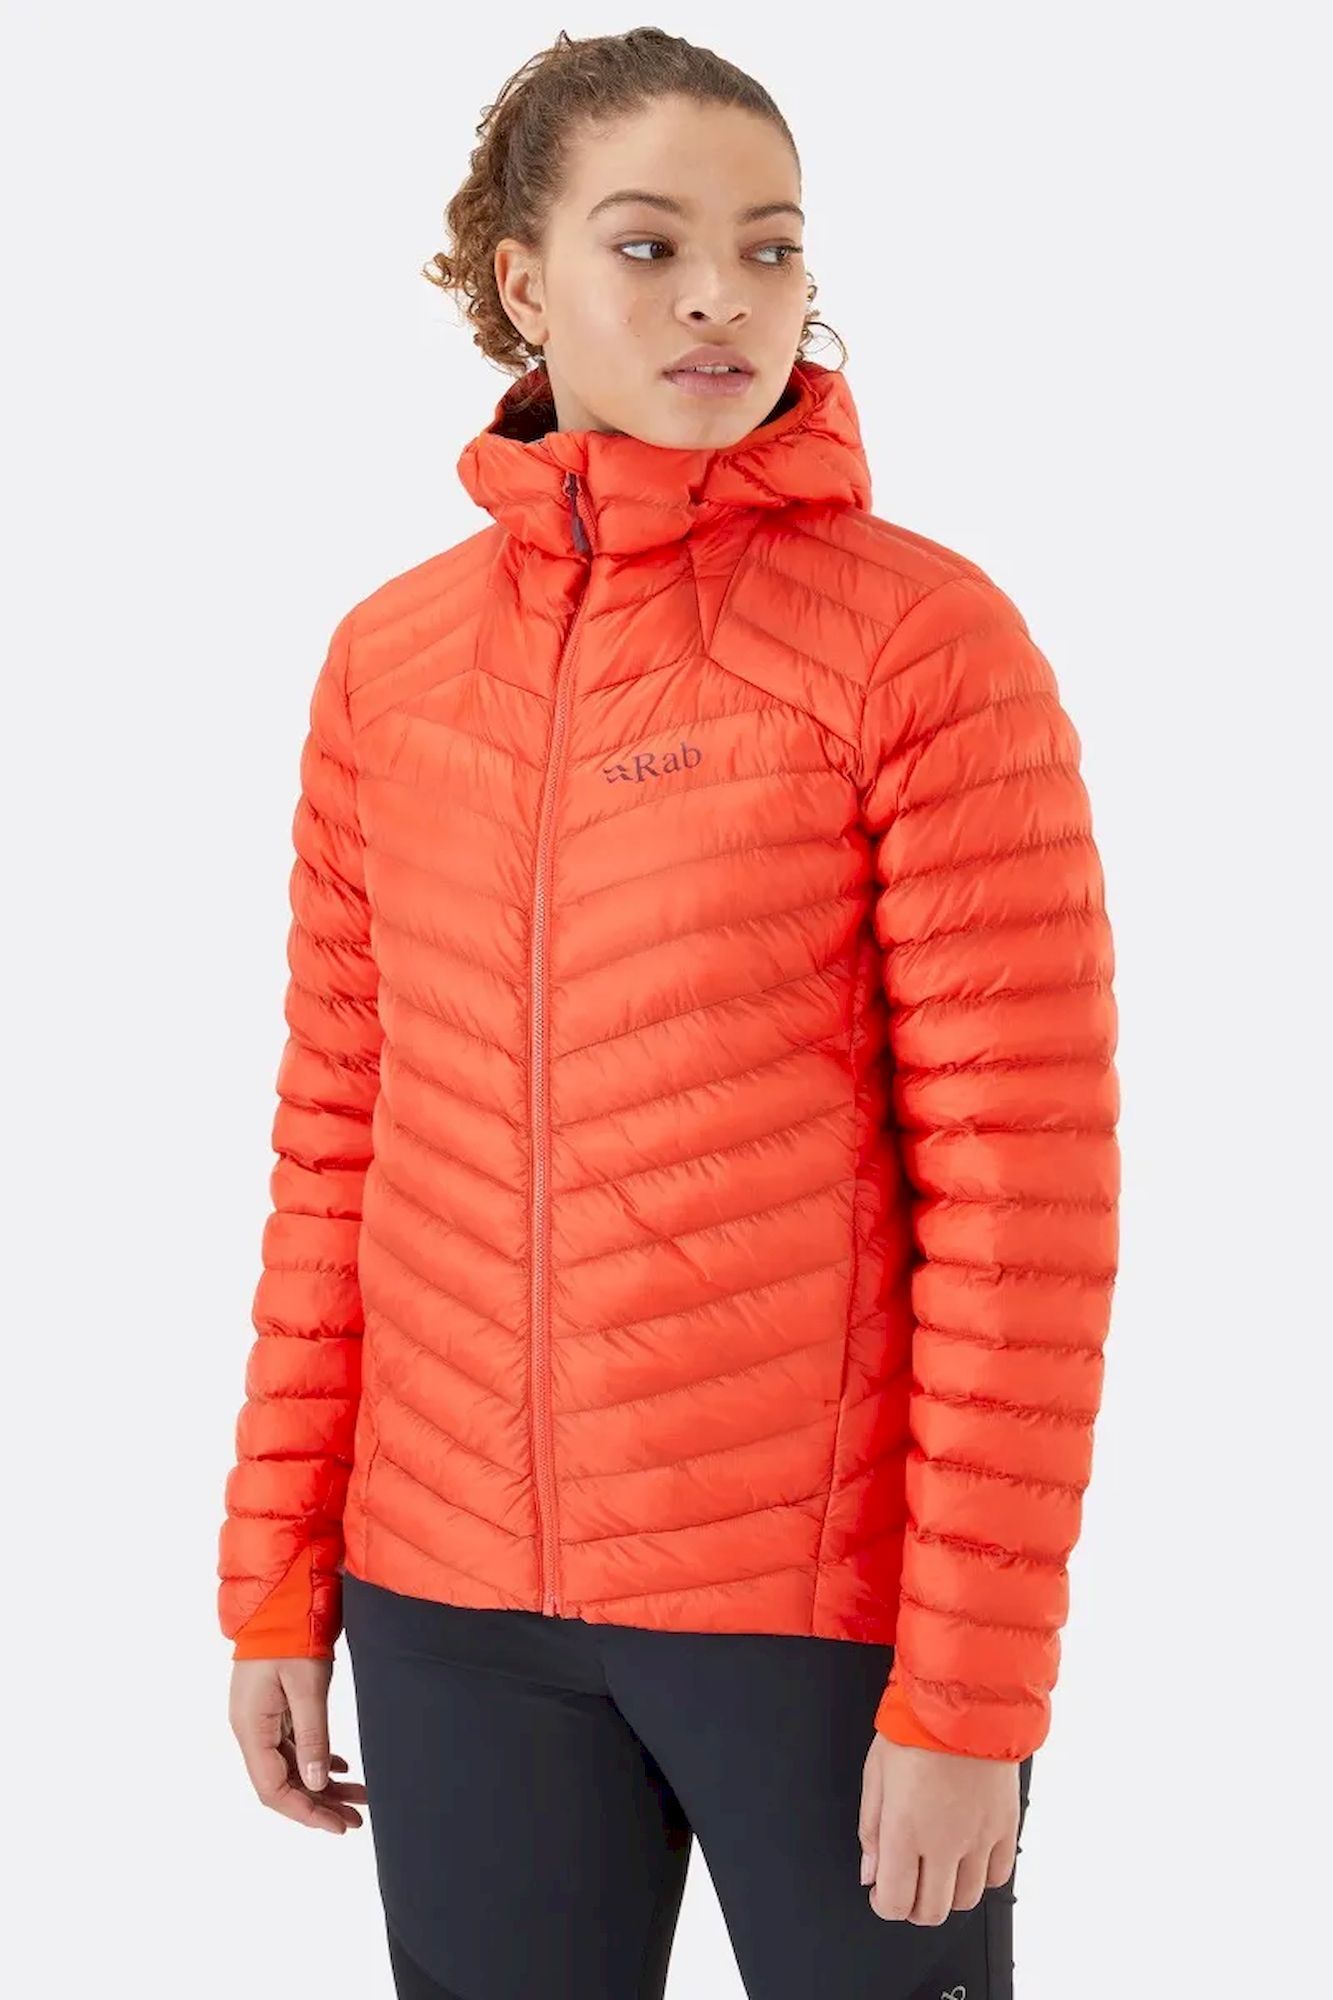 Rab Cirrus Alpine Jacket - Synthetic jacket - Women's